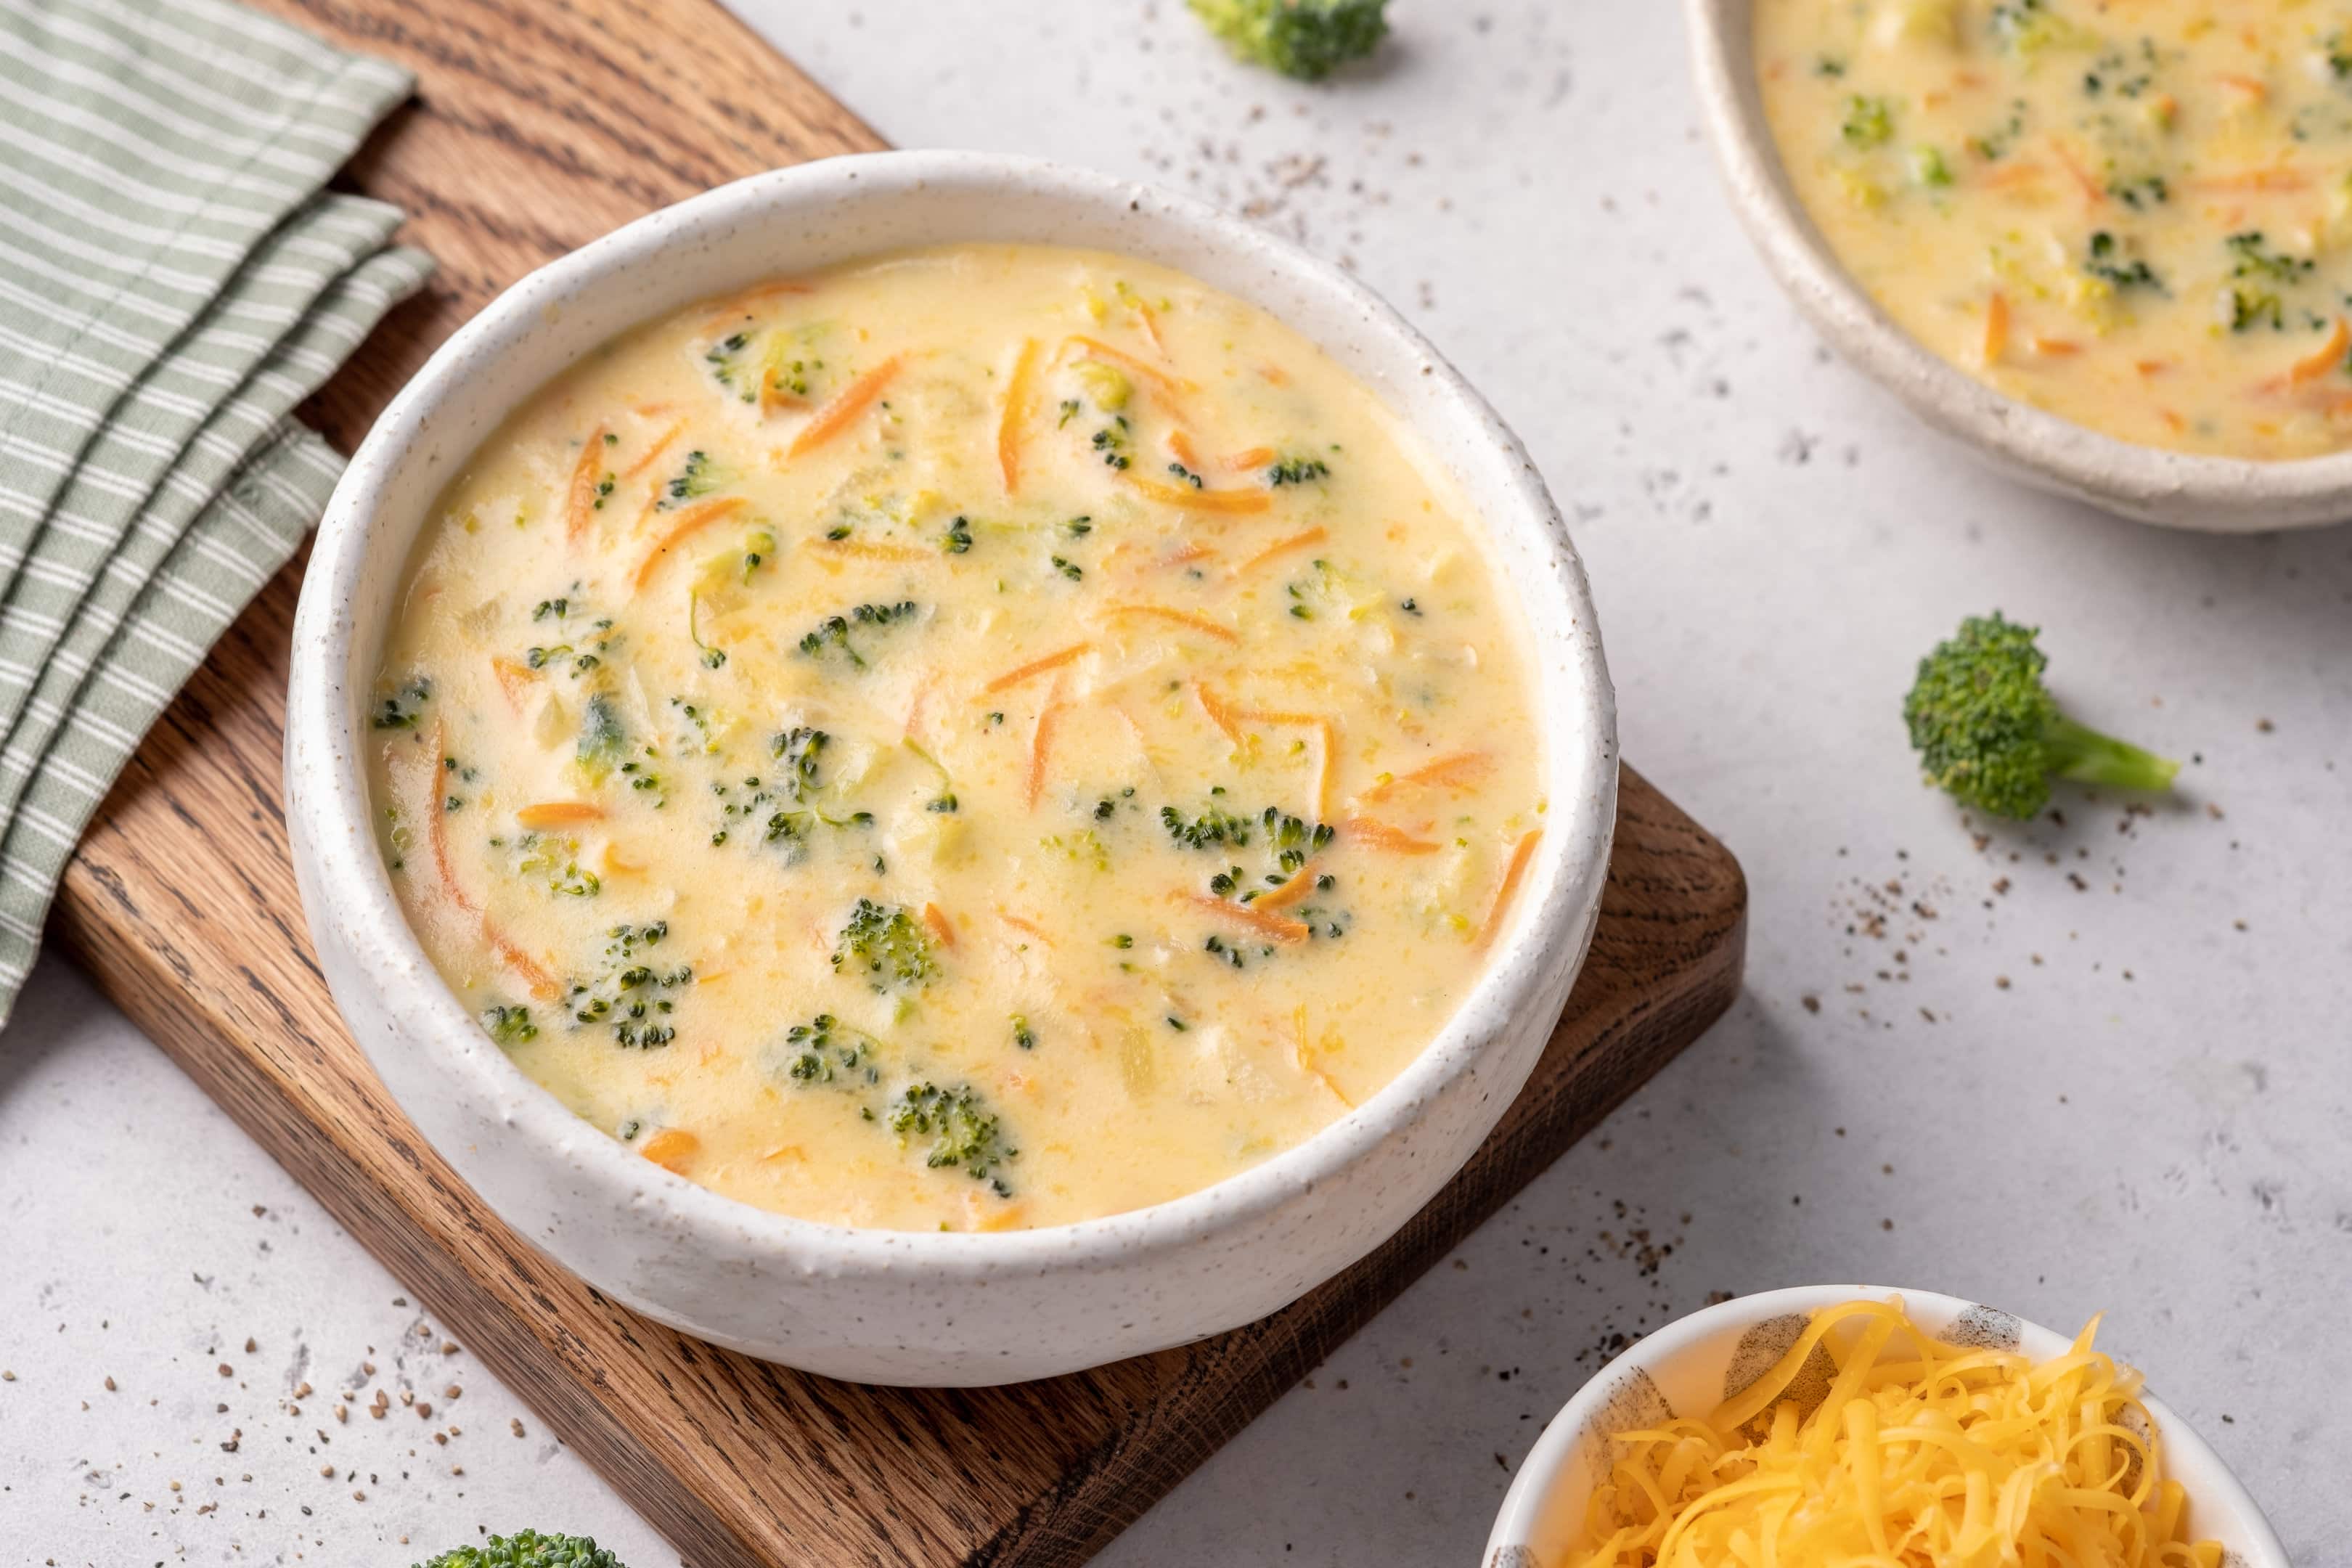 O'Charley's potato soup with broccoli and cheddar cheese